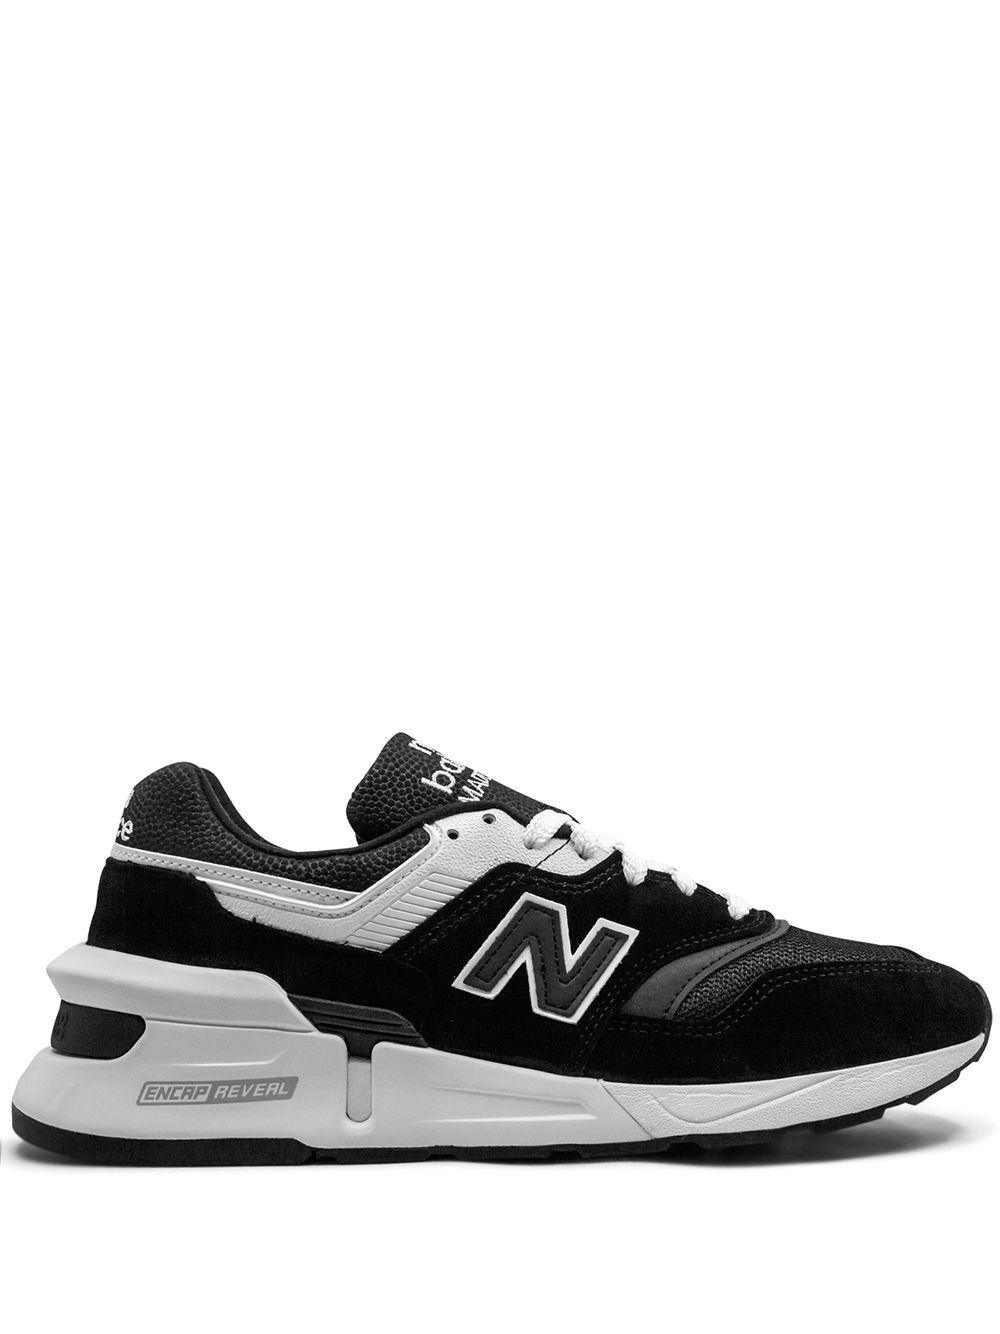 New Balance 997 low-top sneakers - Black